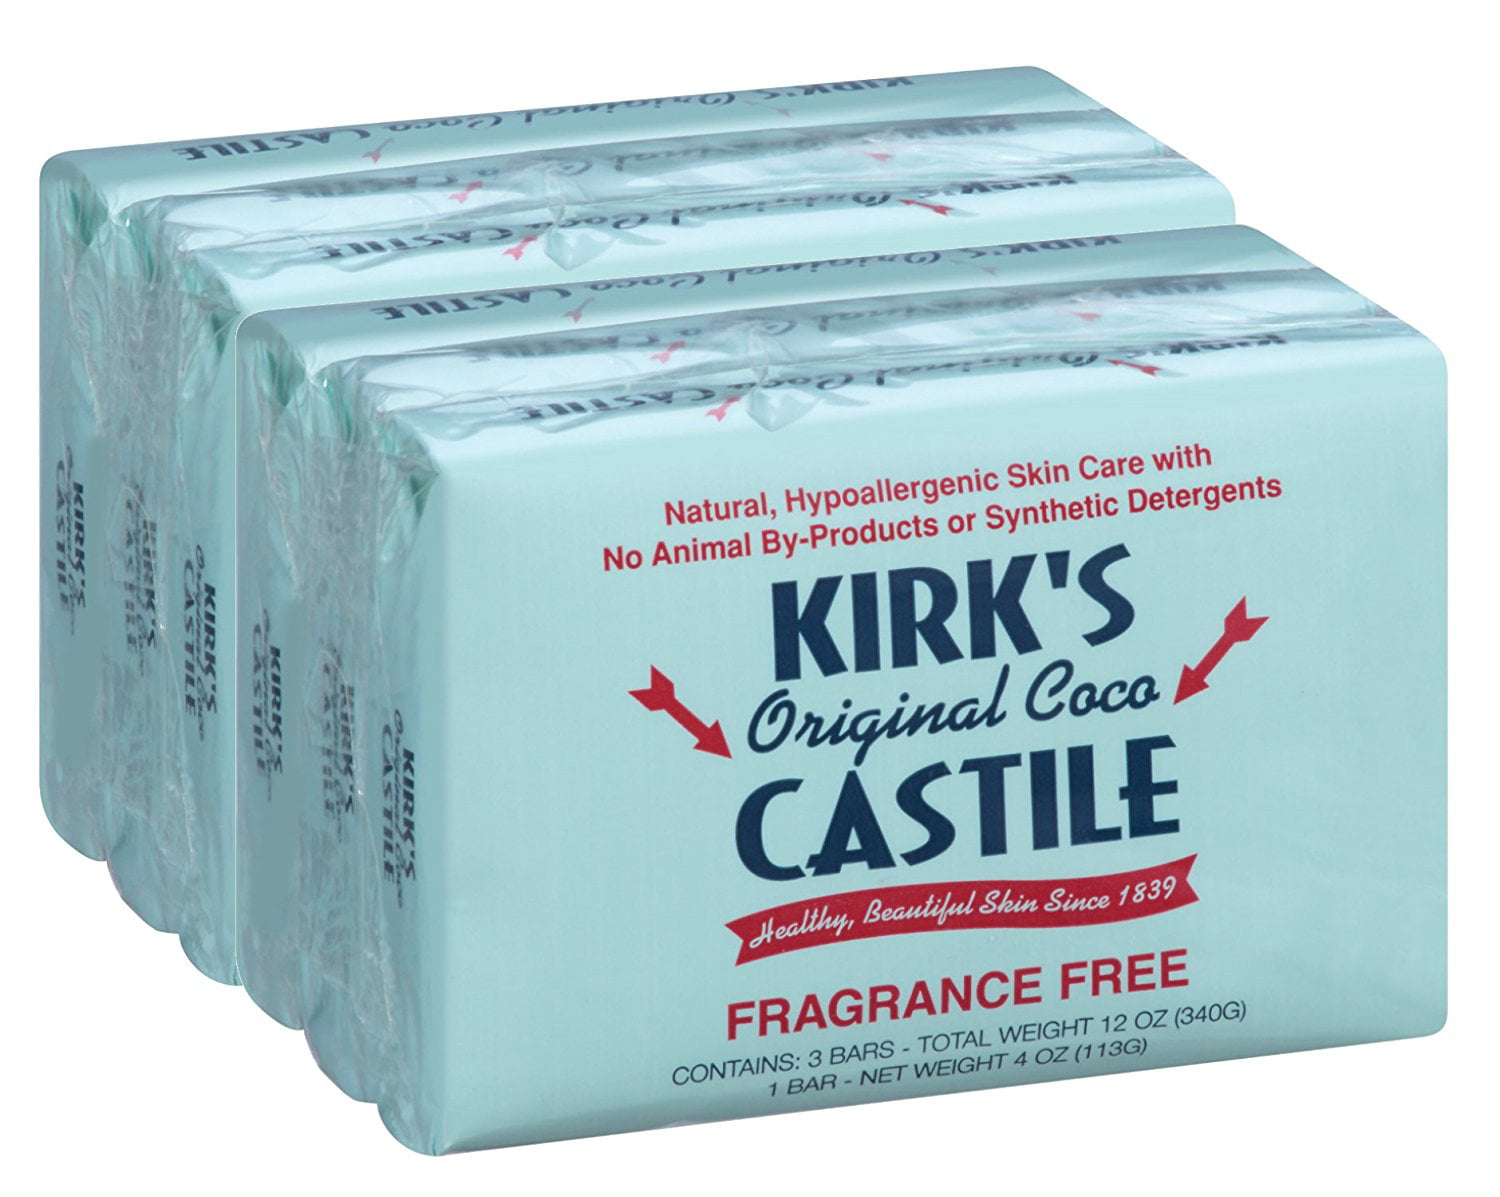 Kirk's Original Coco Castile Bar Soap Fragrance Free 4 Ounces 24 Pack 